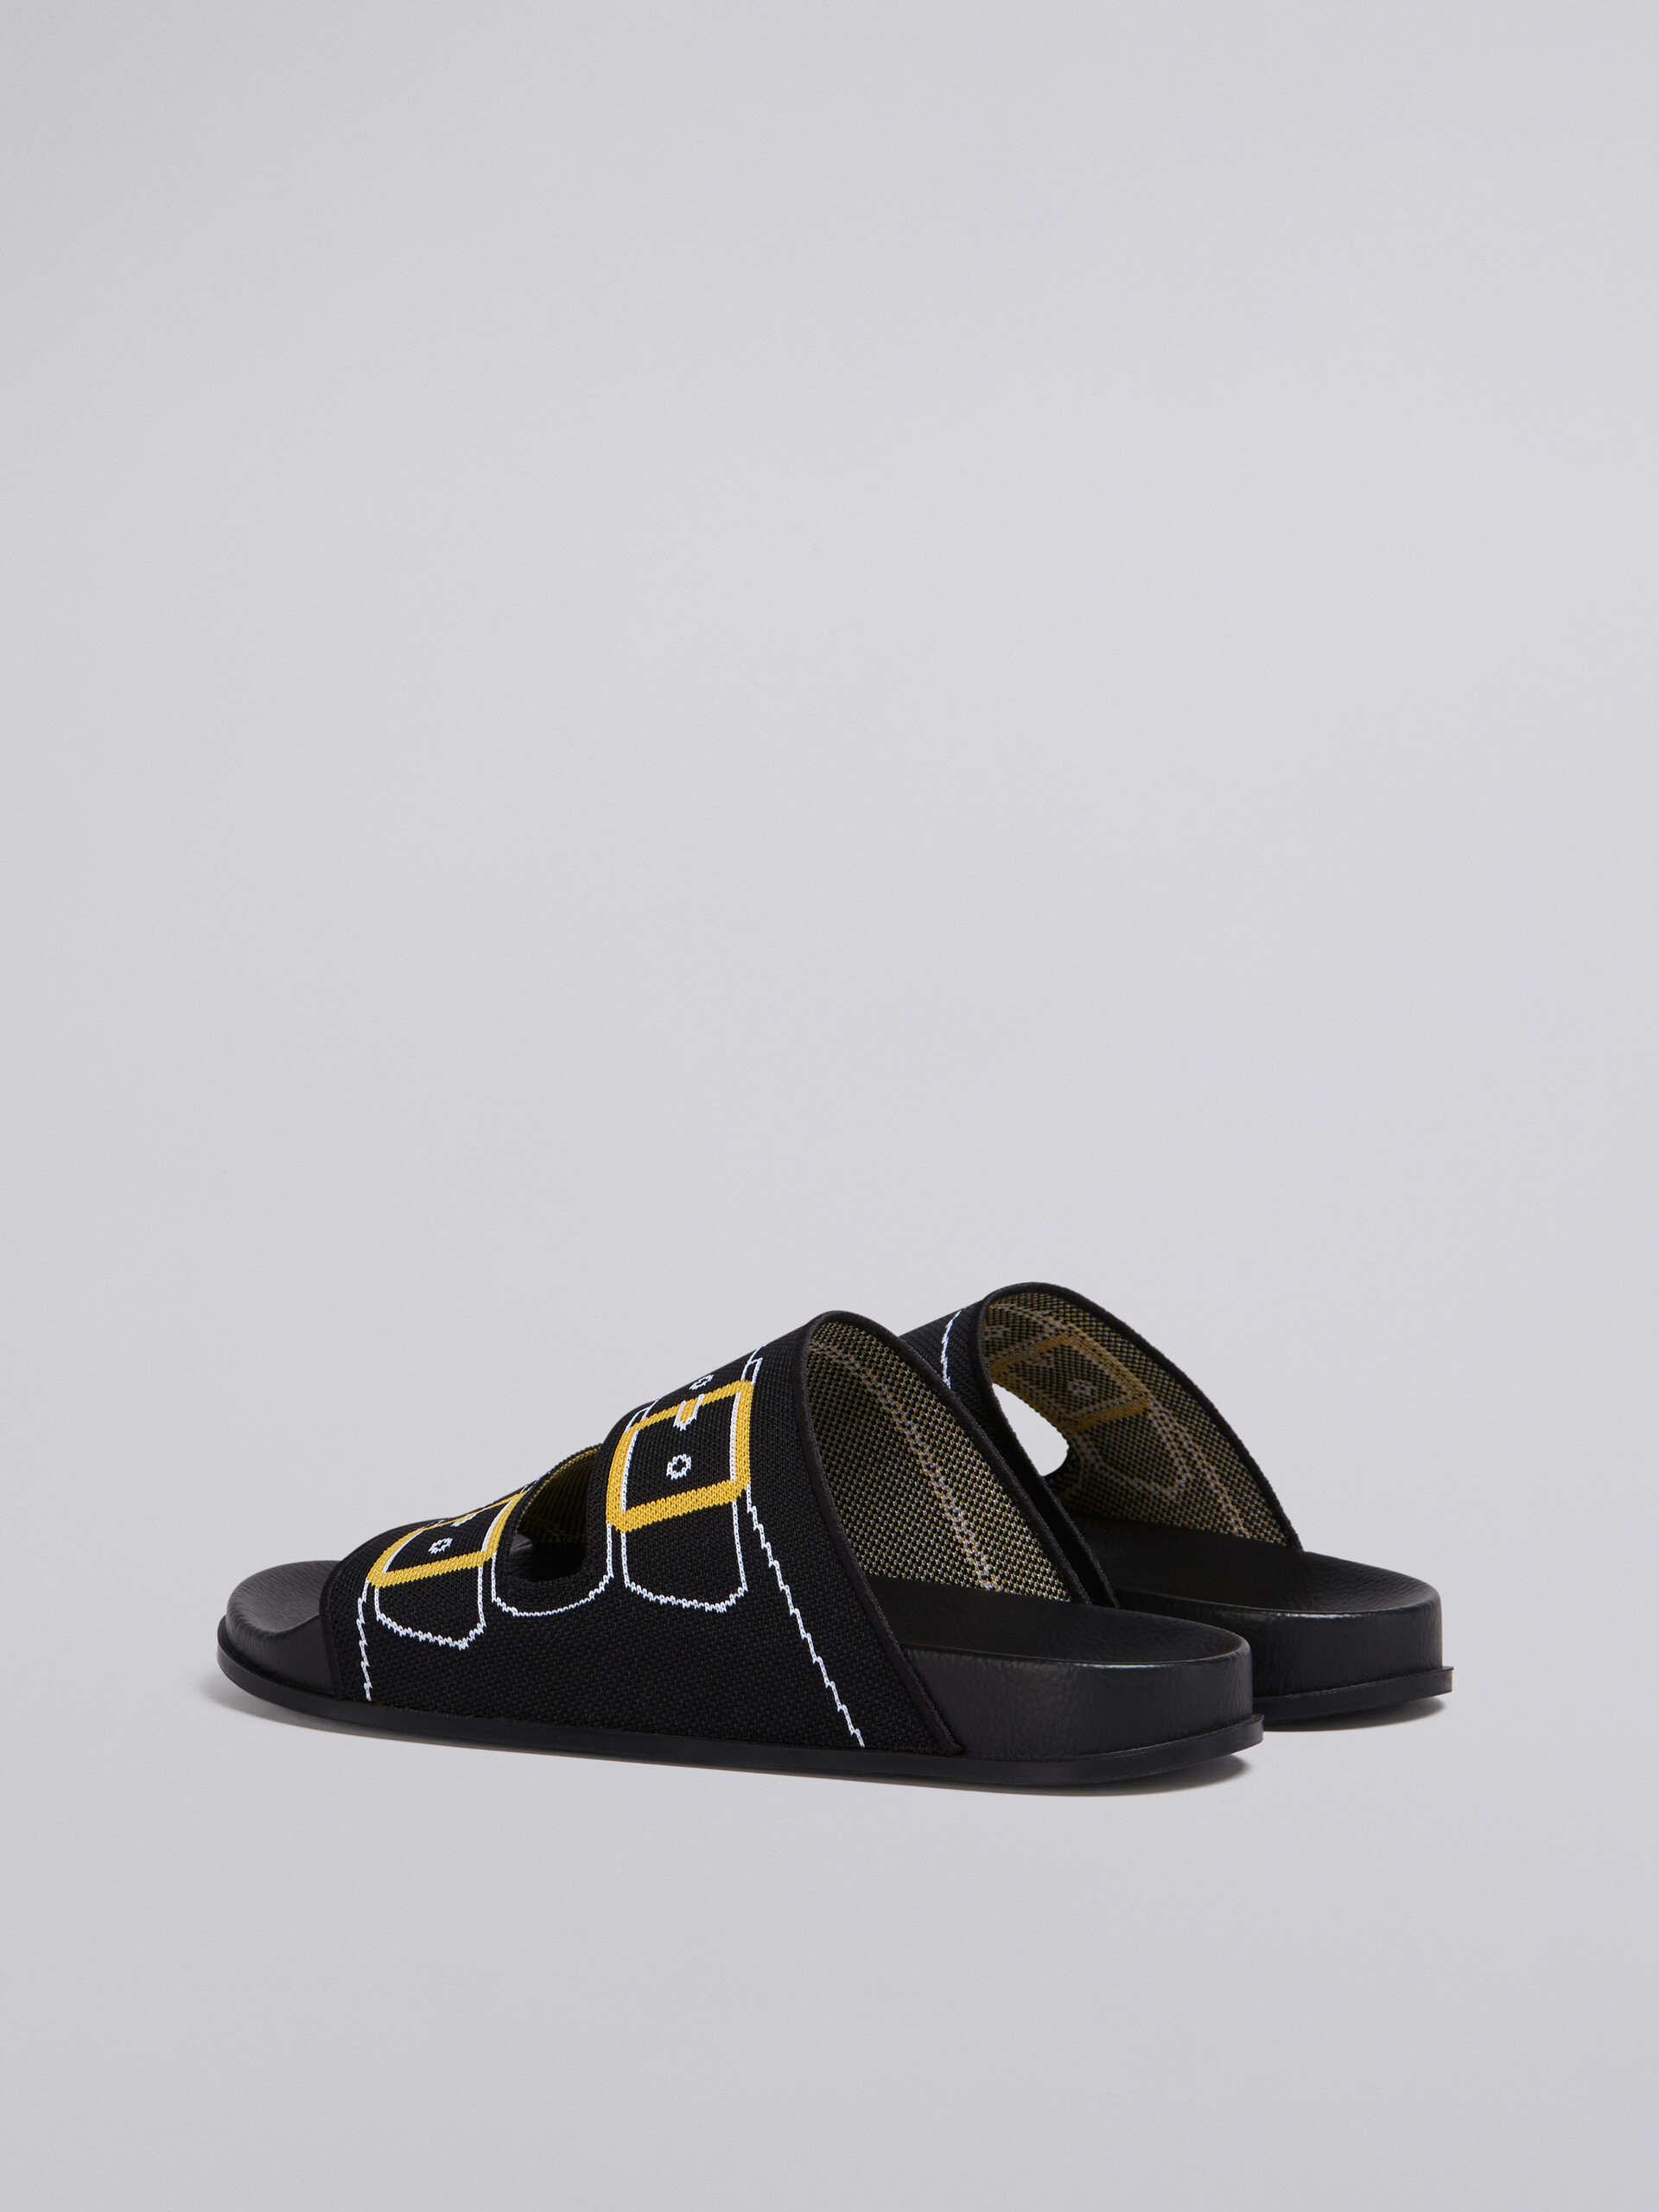 Black trompe l'œil jacquard two-strap slide - Sandals - Image 3